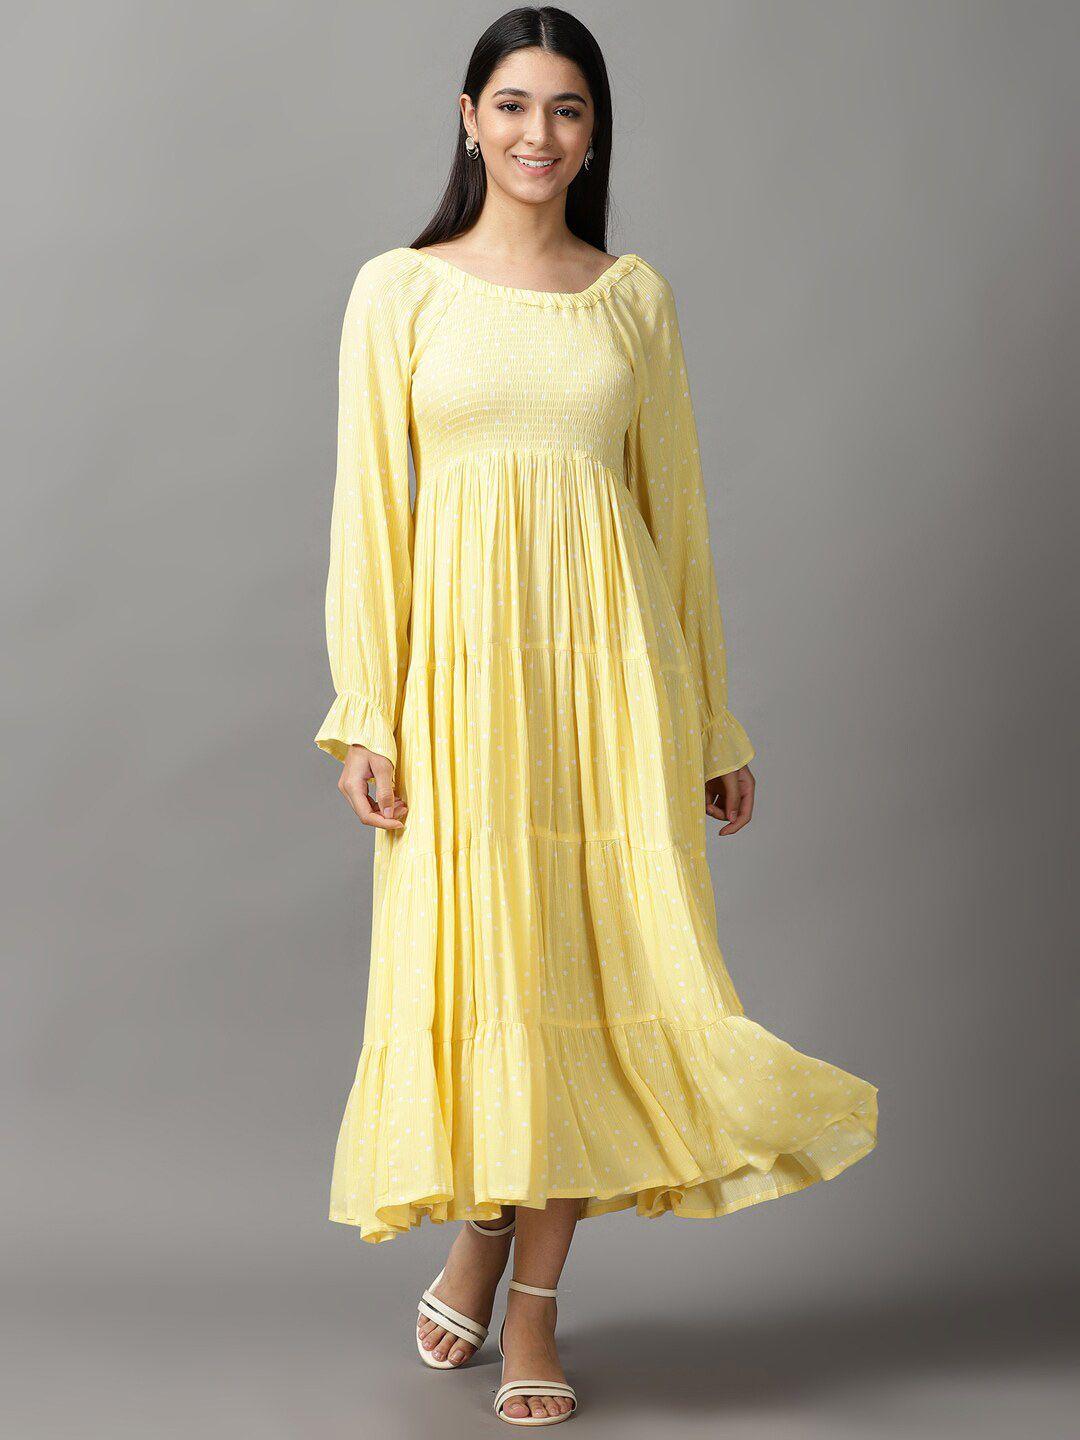 showoff-women-yellow-&-white-polka-dots-maxi-dress